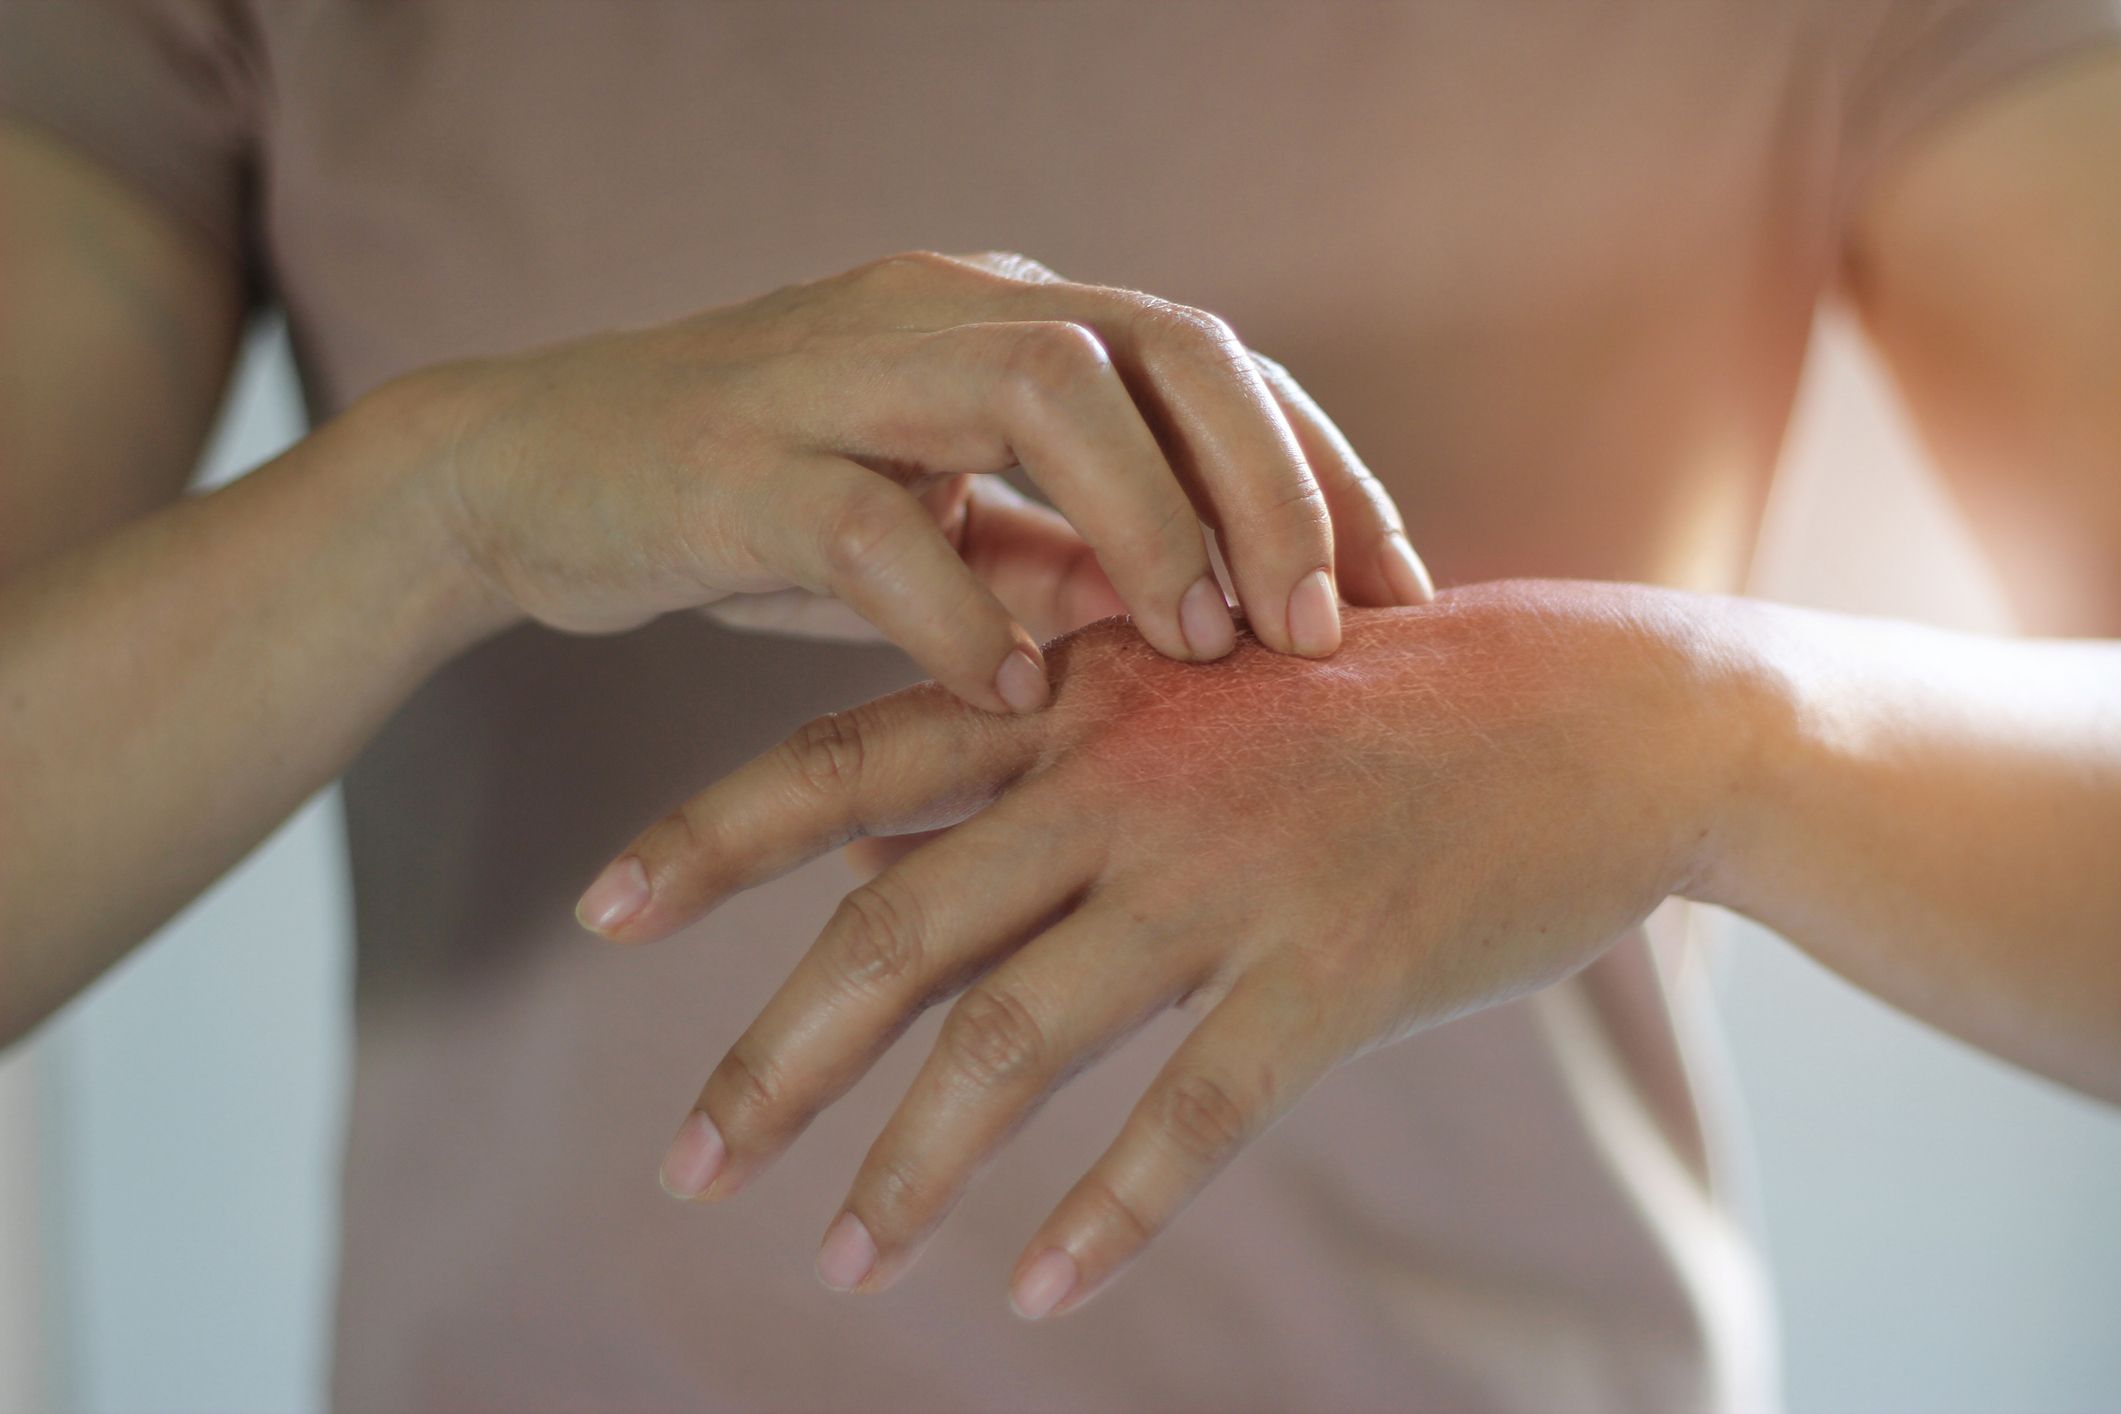 Dry Hands Peeling Skin Image & Photo (Free Trial) | Bigstock